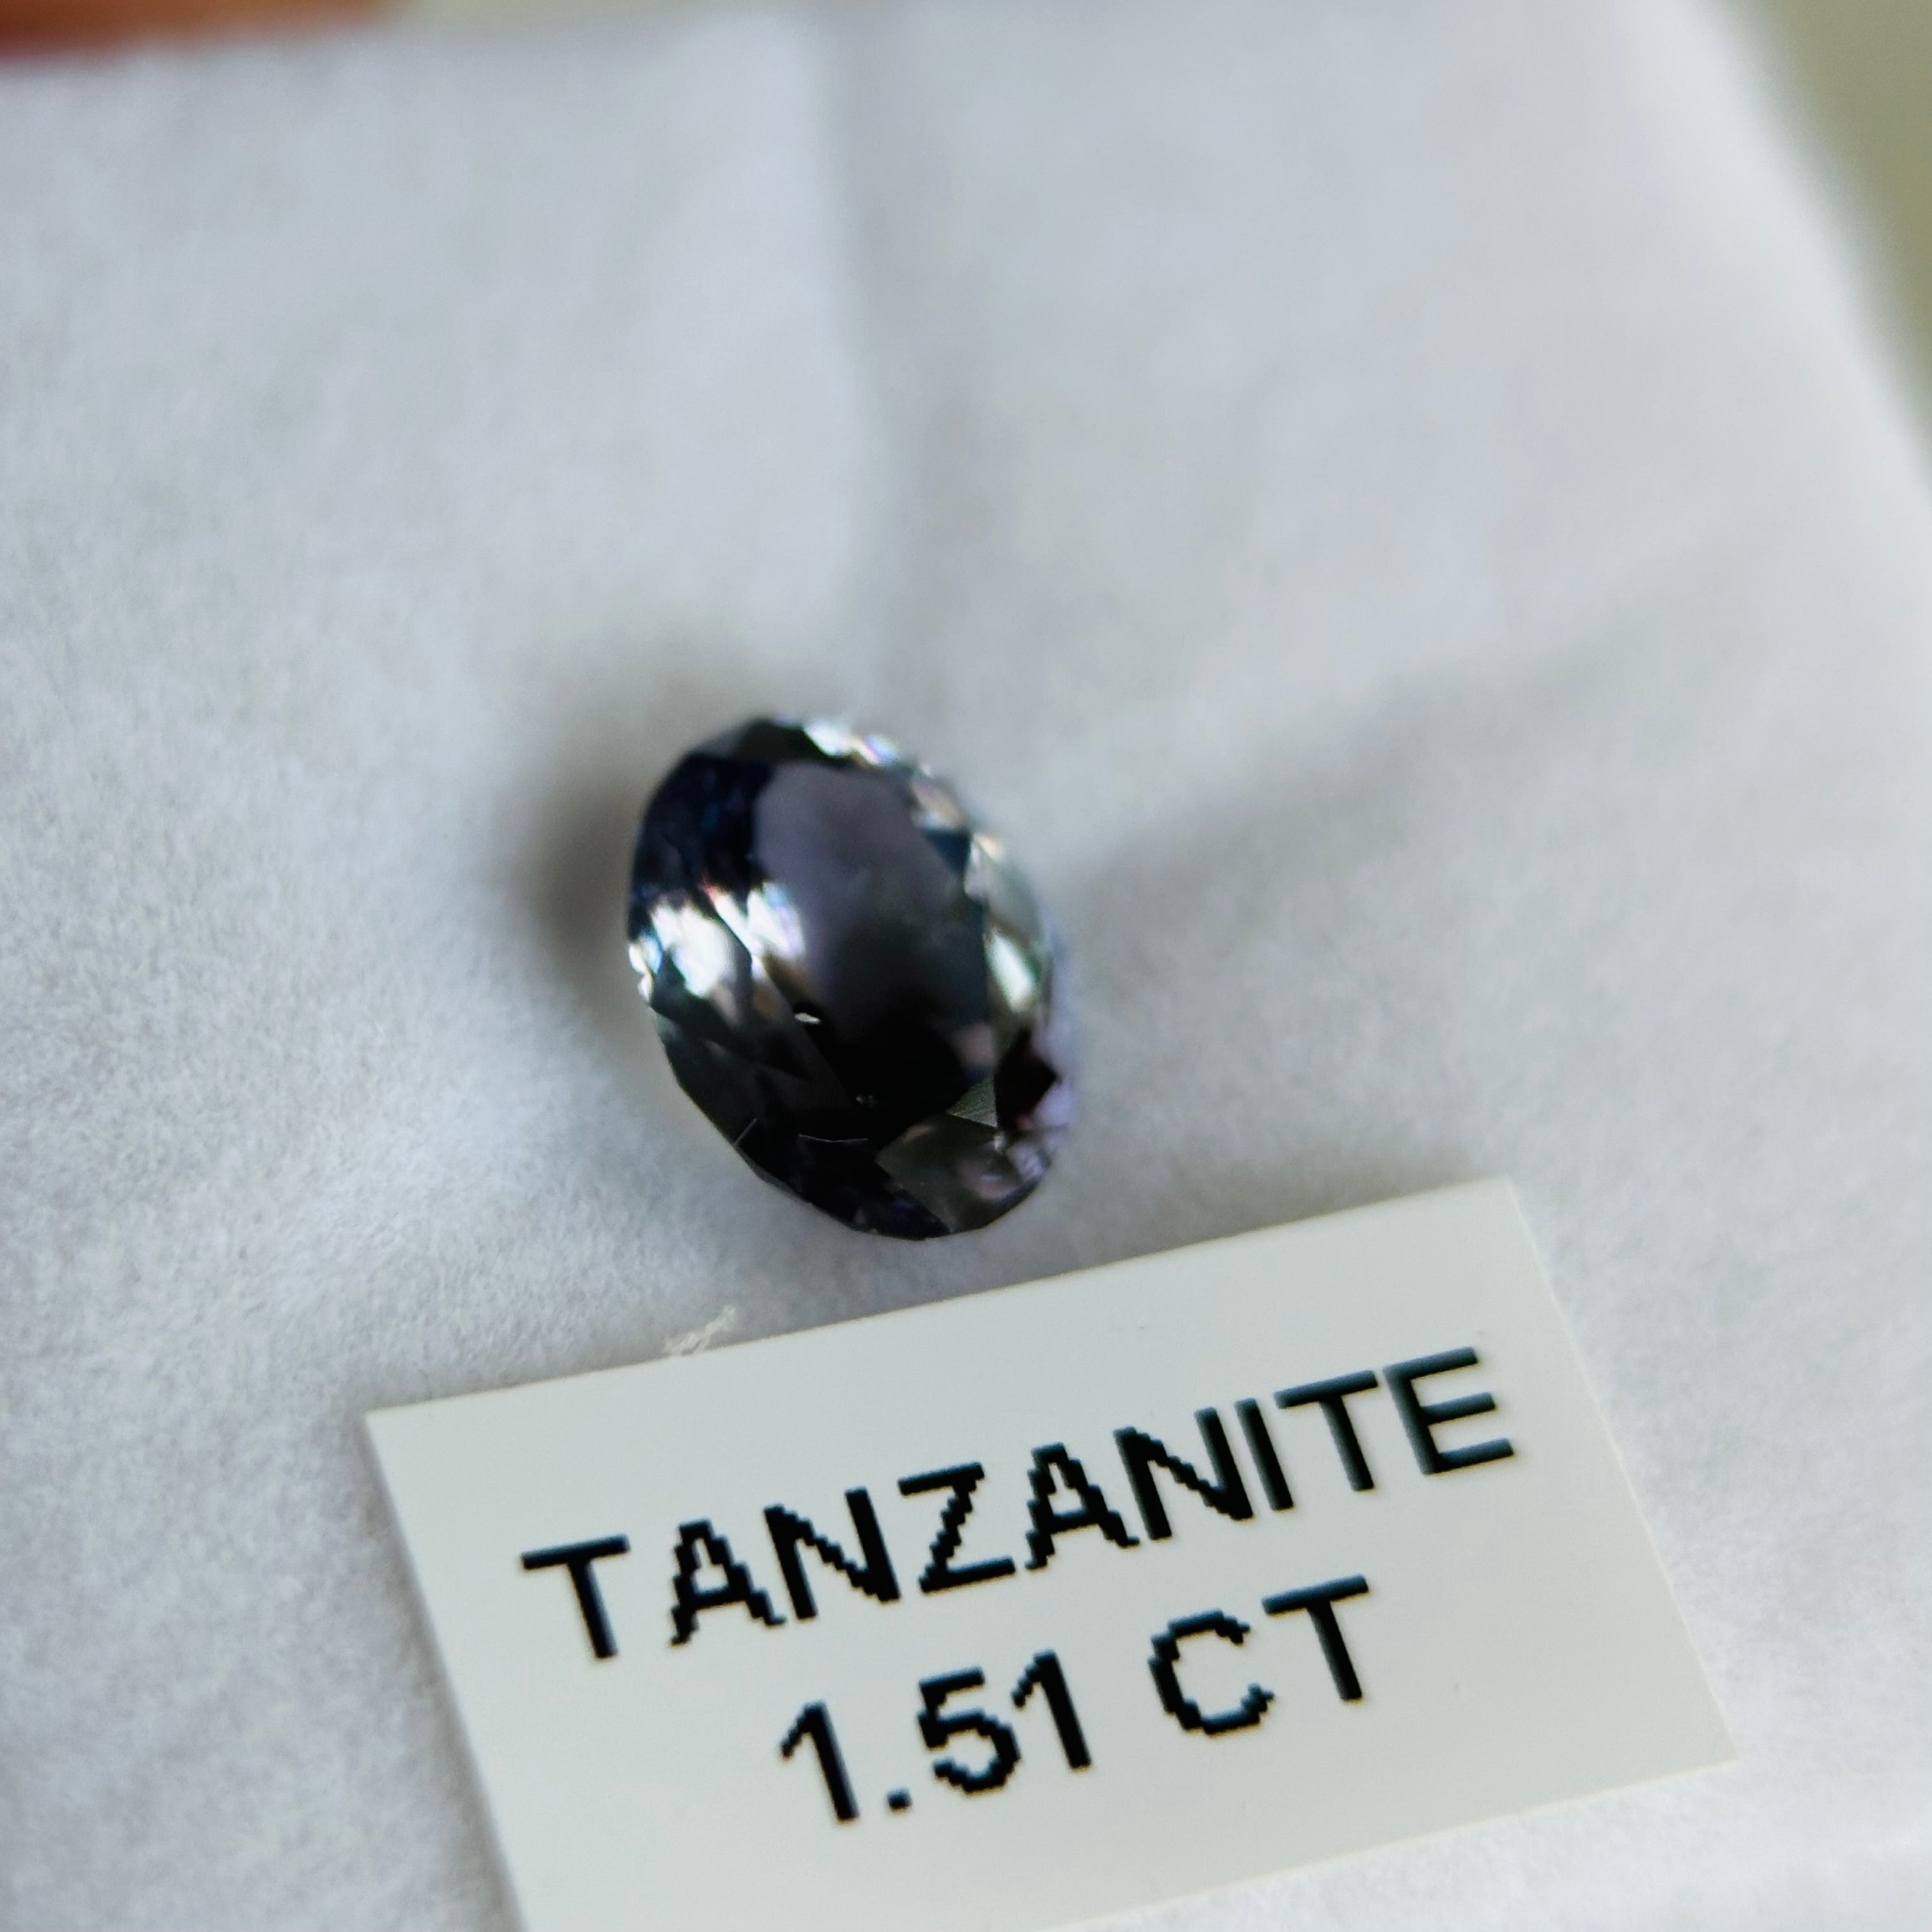 1.51ct Tanzanite, Tanzania. Unheated Untreated